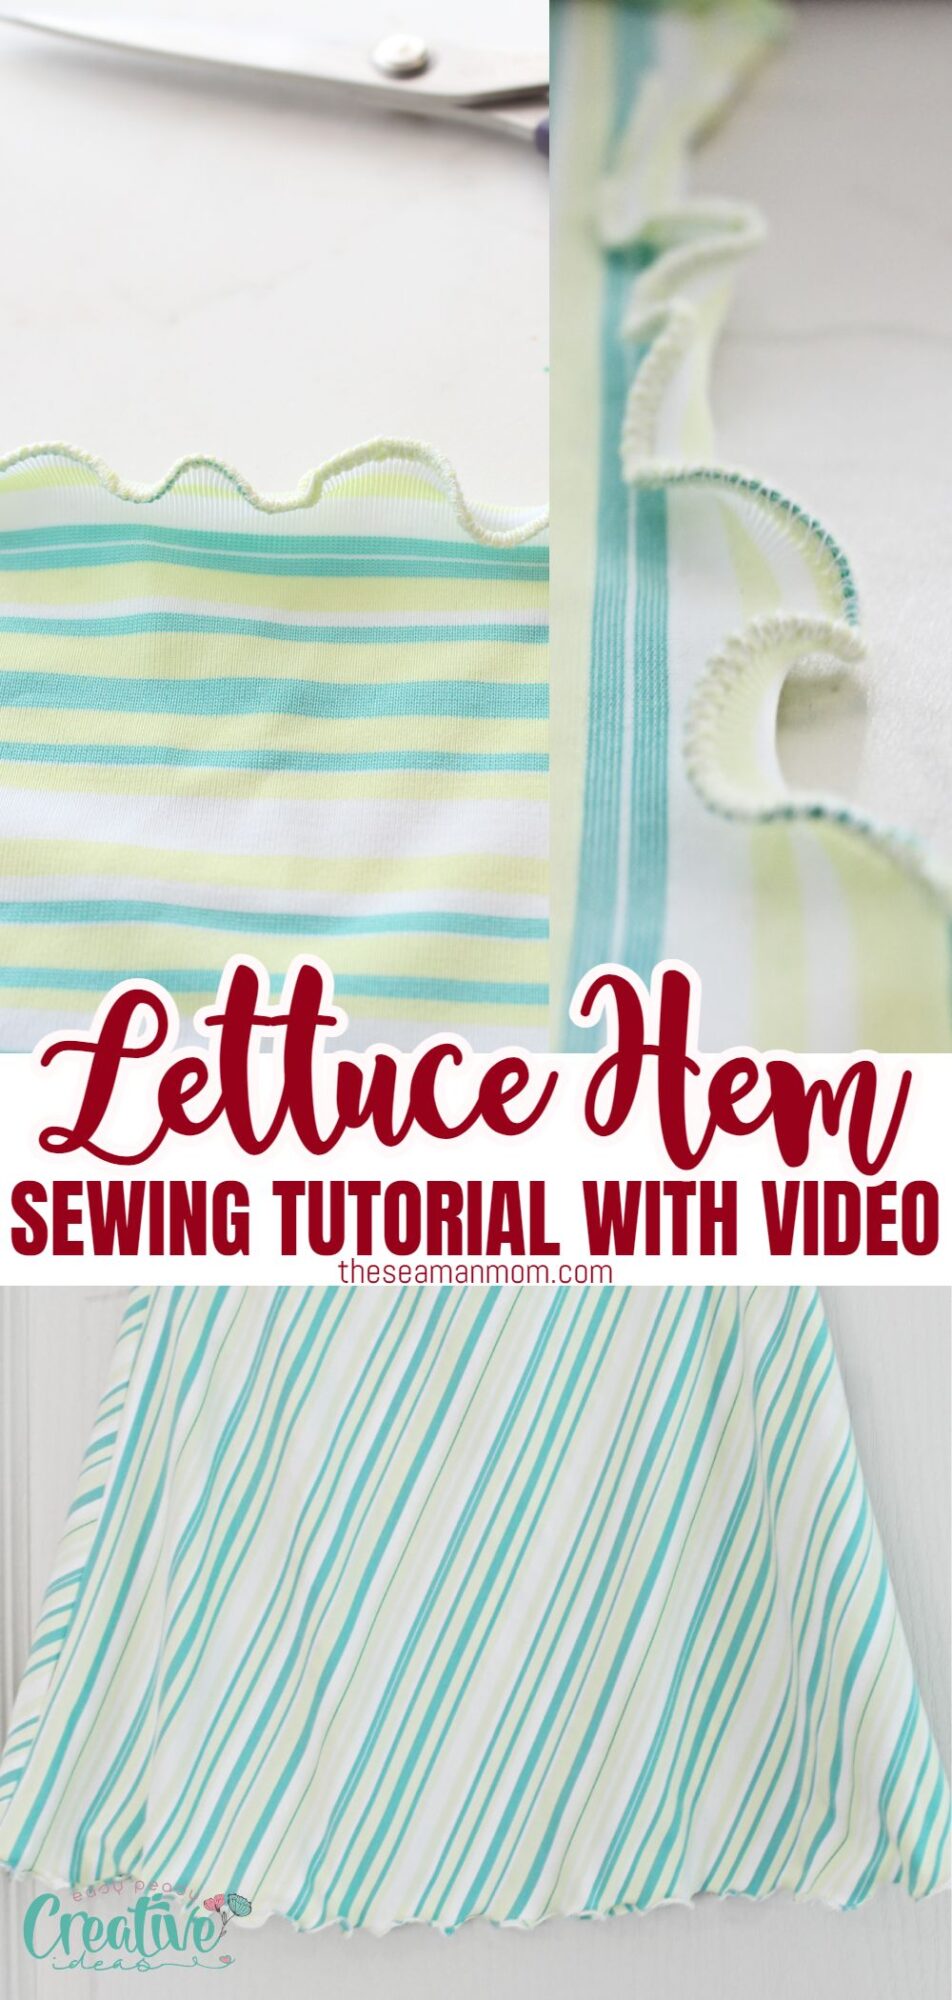 Lettuce hem sewn on a knit skirt